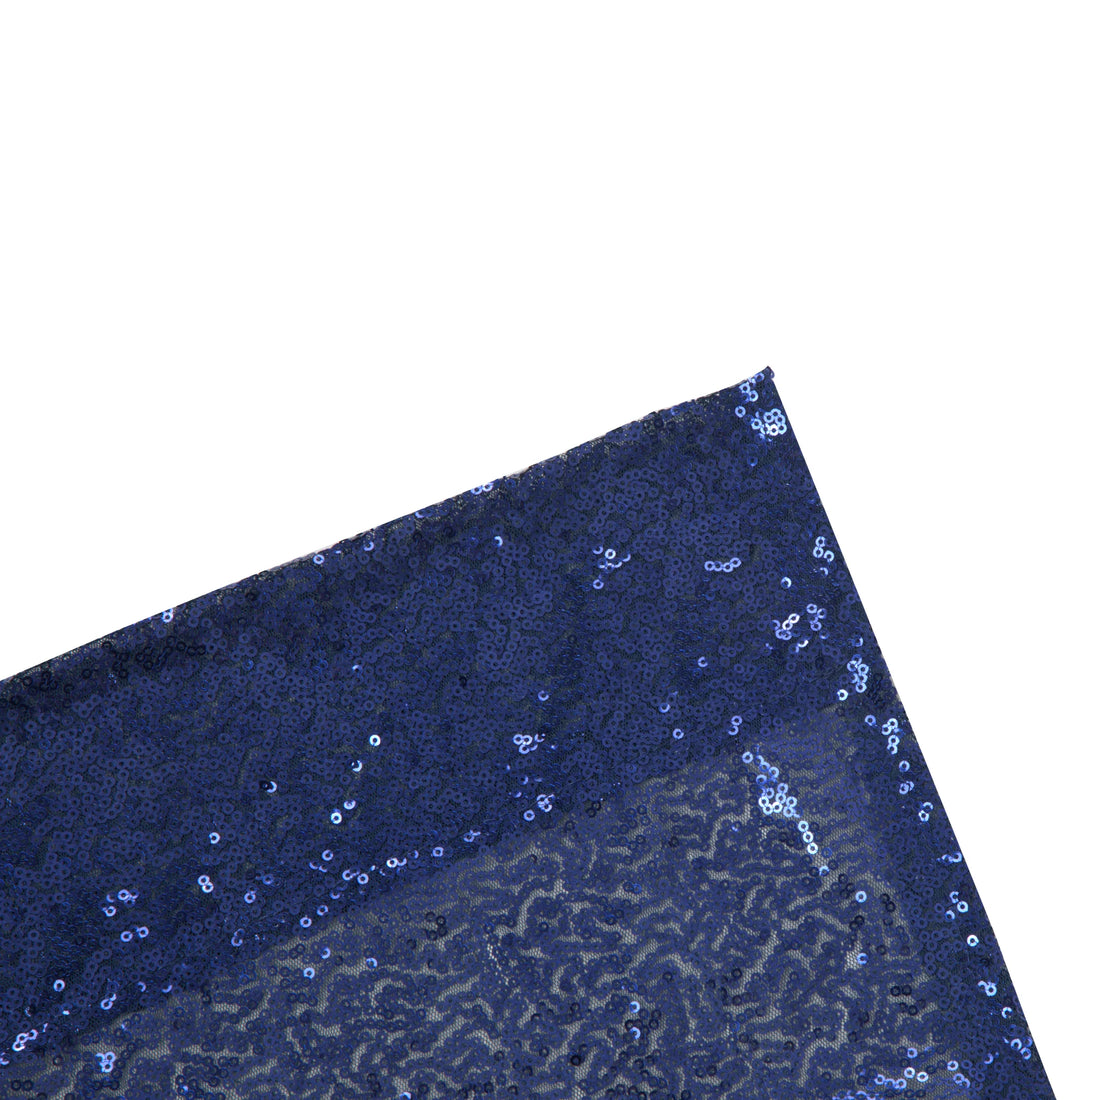 Glitz Sequin Mesh Net Drape/Backdrop panel With Rod Pockets Rose Morning